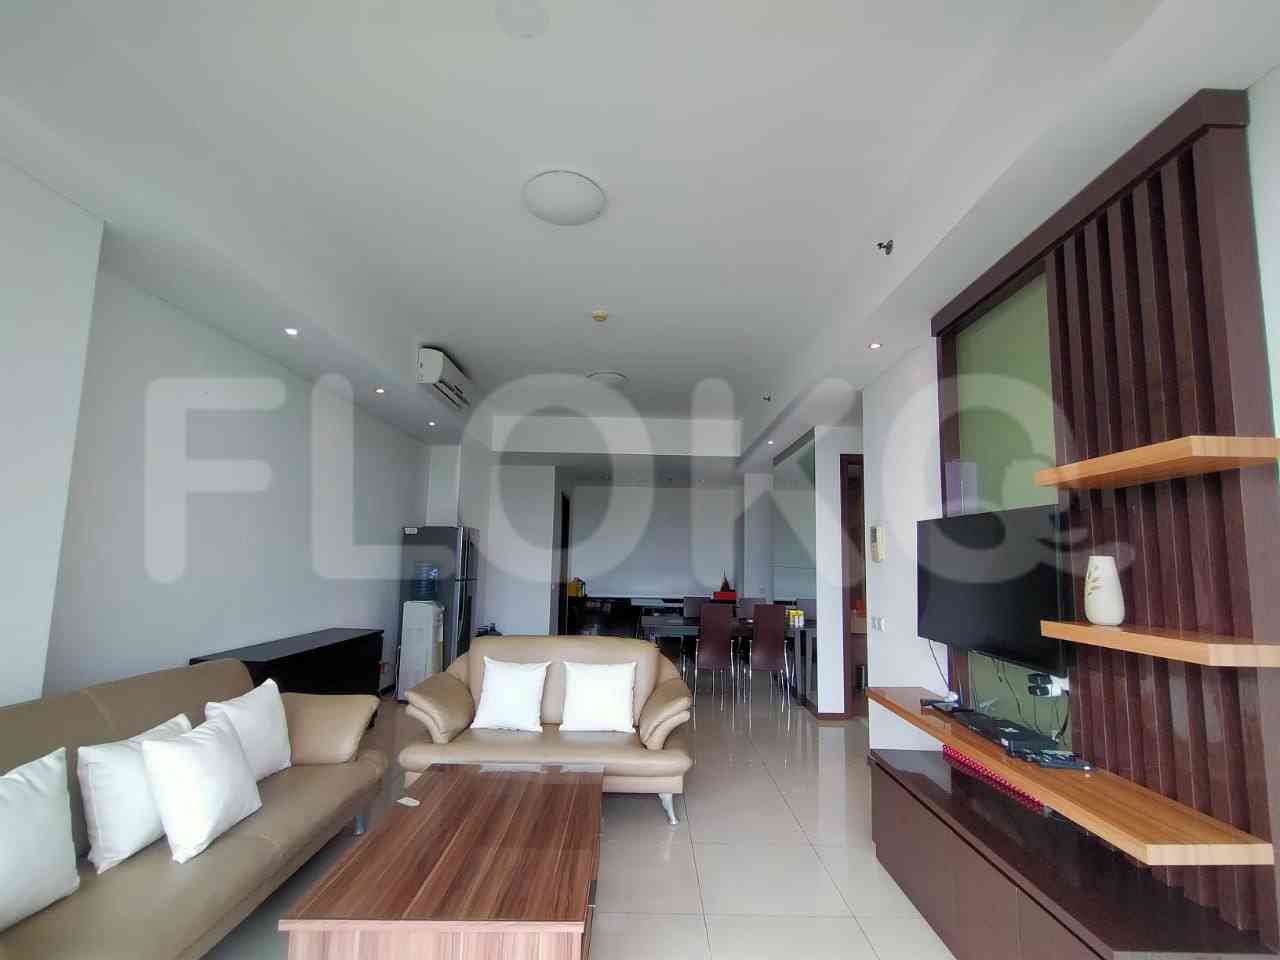 2 Bedroom on 2nd Floor for Rent in Kemang Village Residence - fke4d7 1